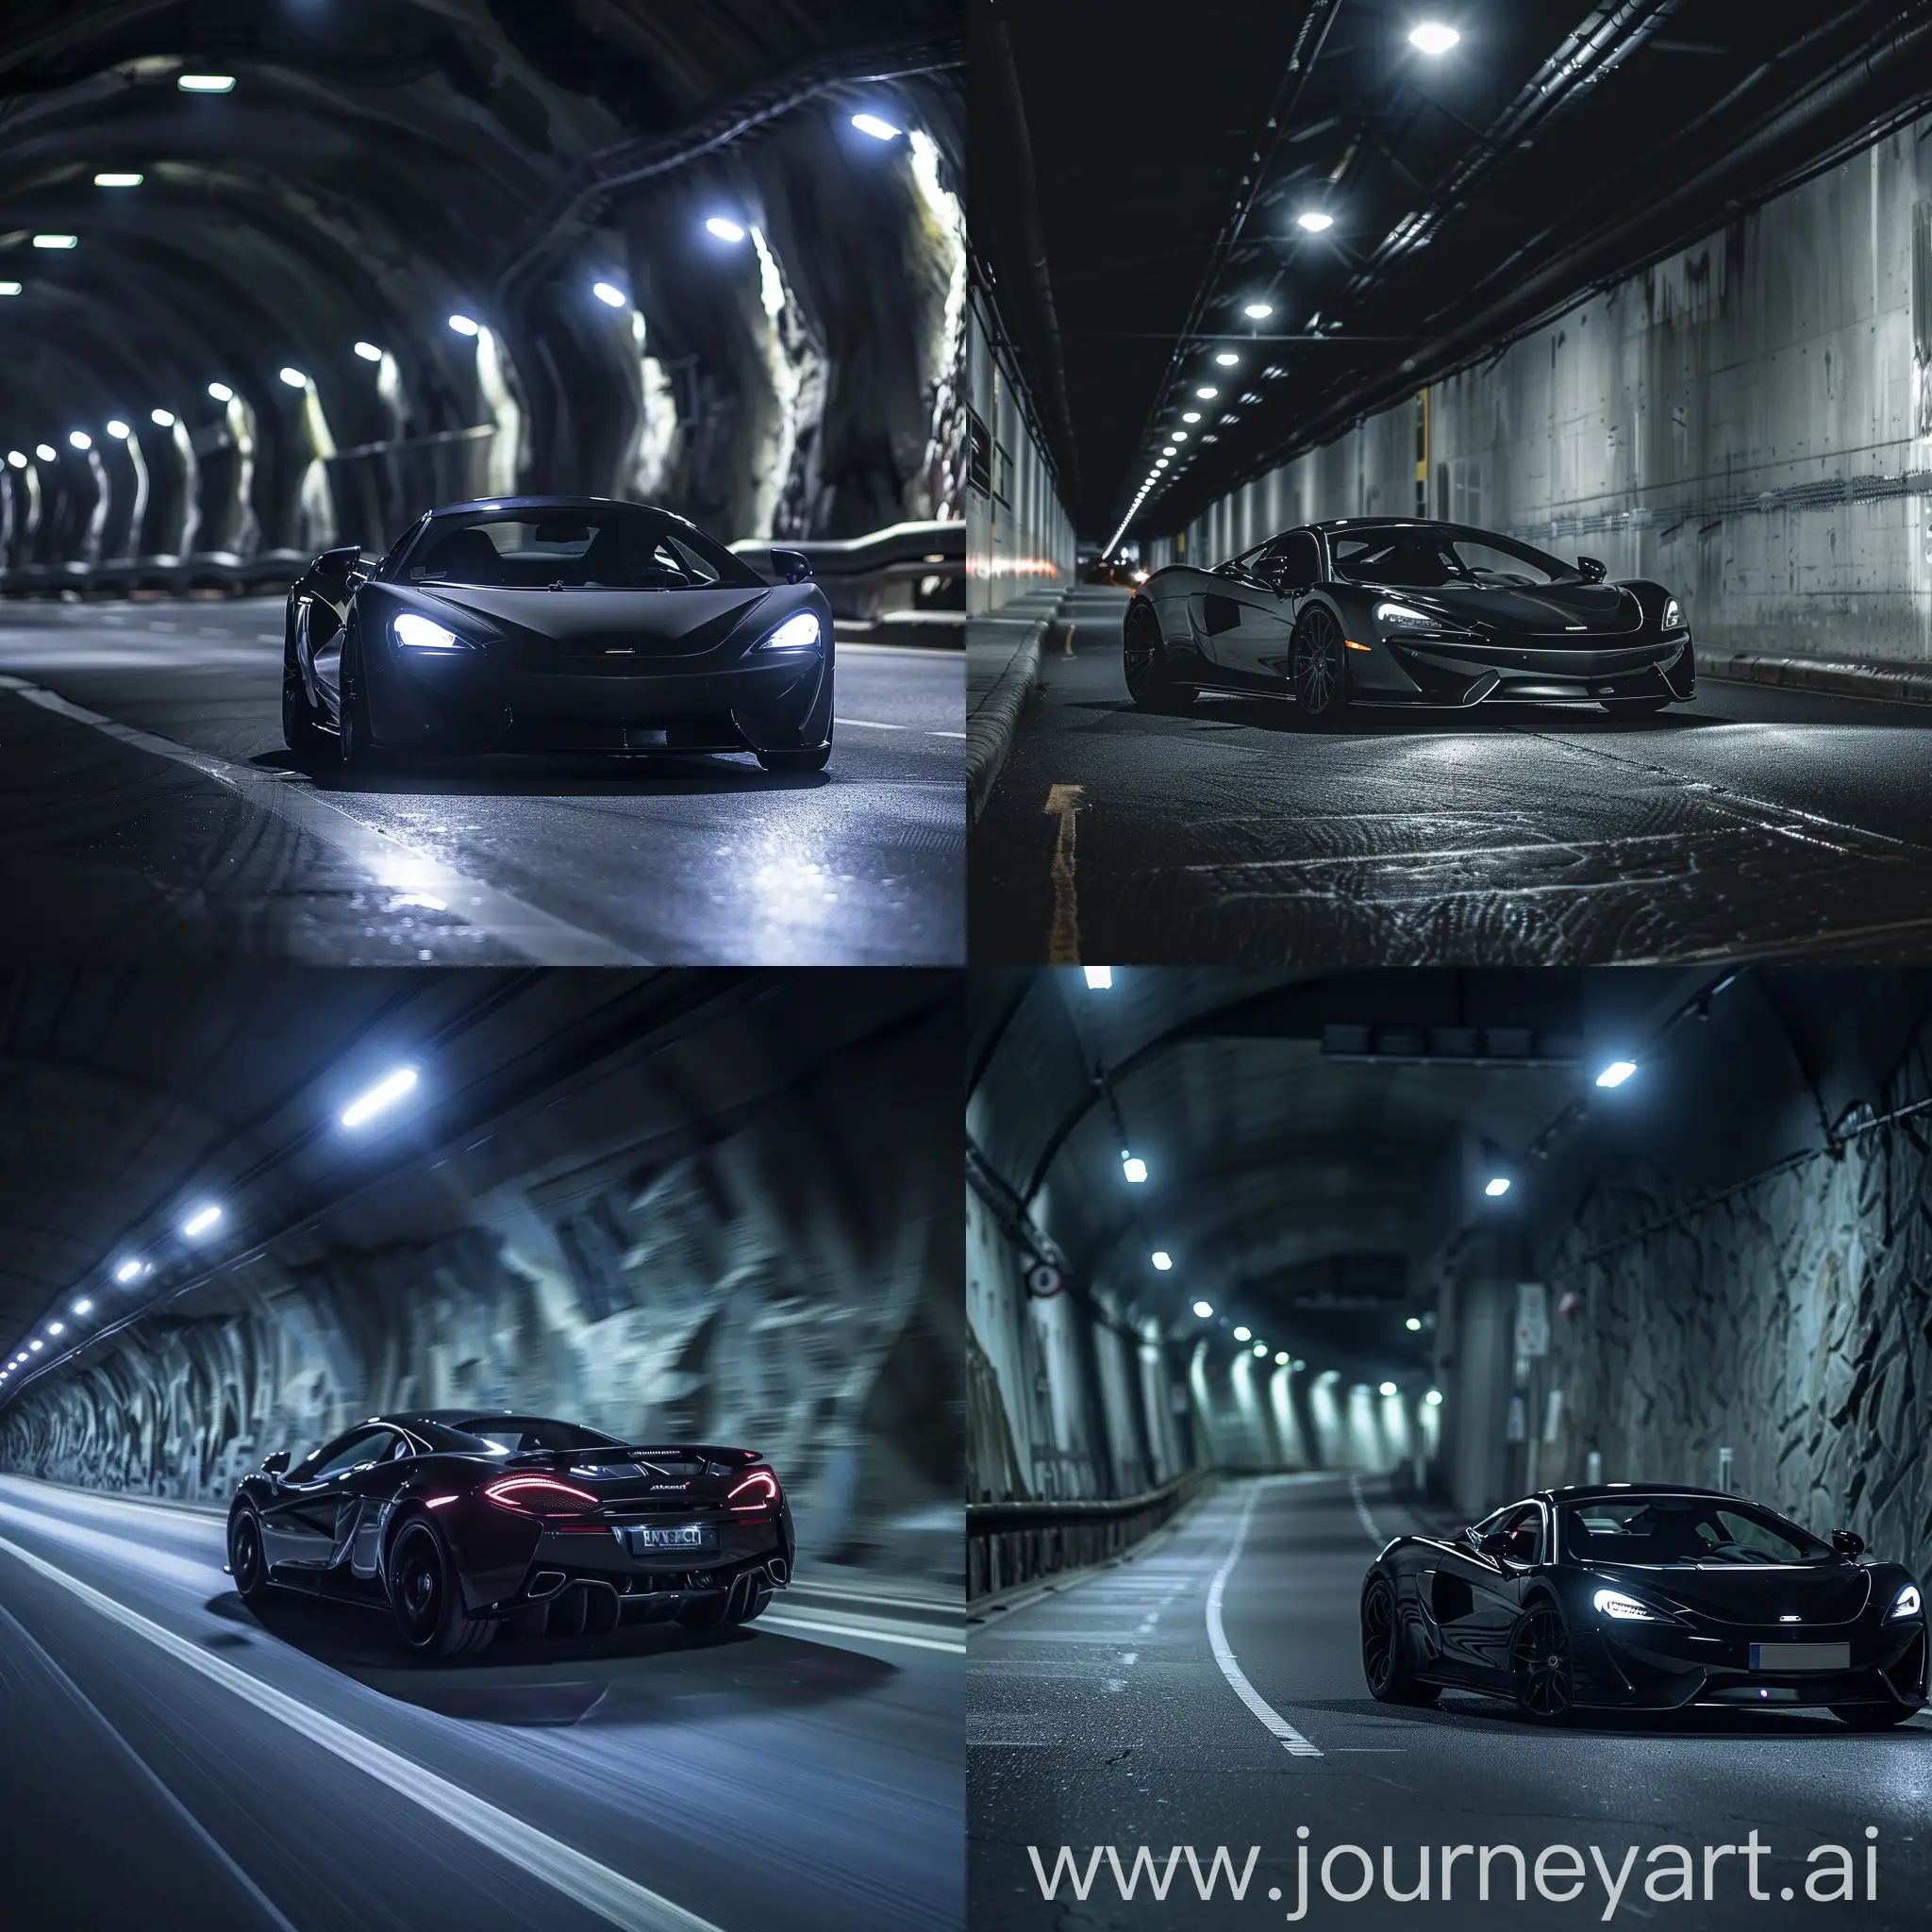 Sleek-Black-McLaren-Racing-Through-Night-Tunnel